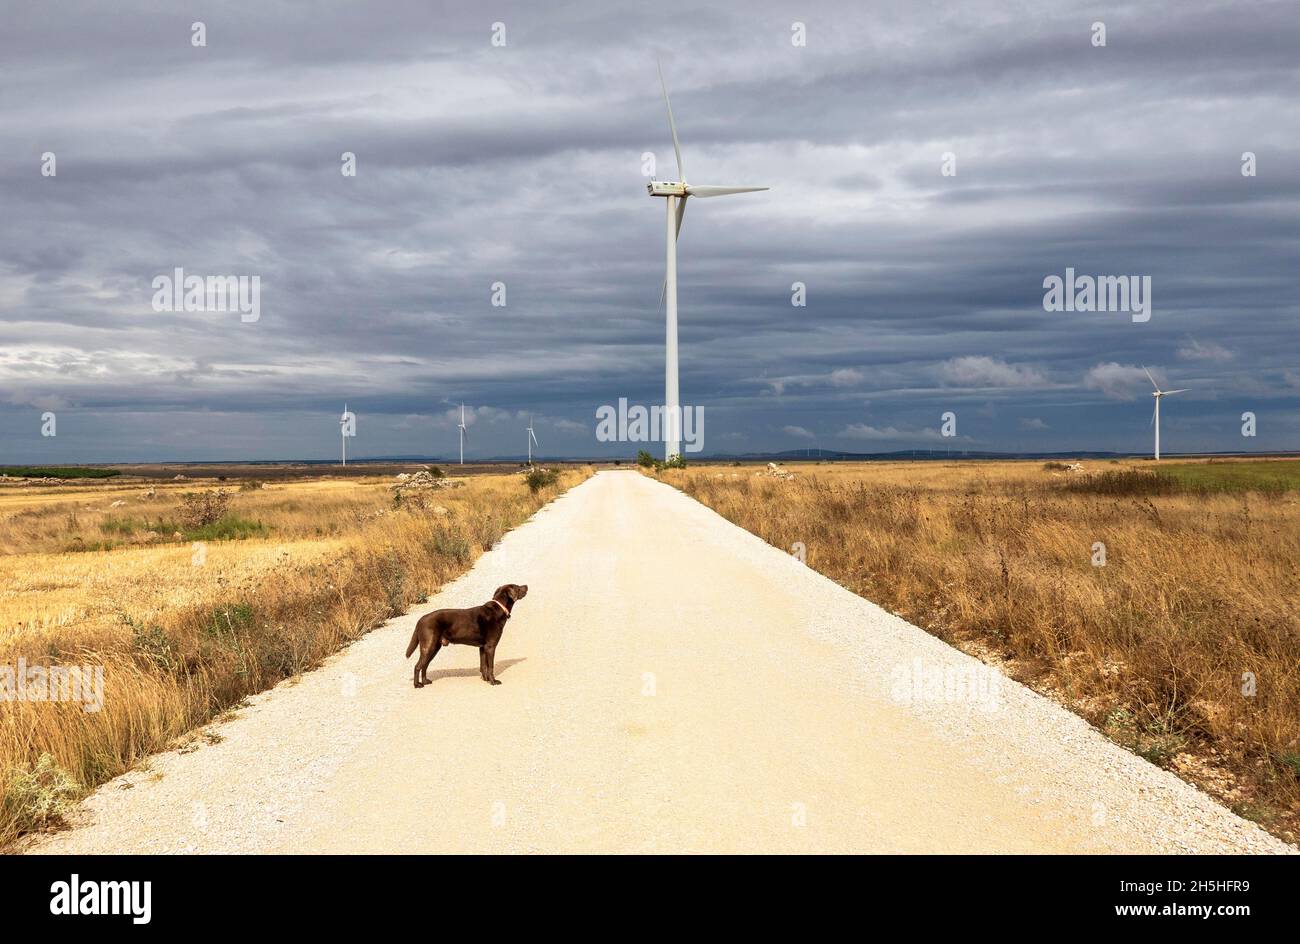 Dog in front of wind turbines on the Paramo de Masa plateau, Burgos province, Castile, Spain Stock Photo